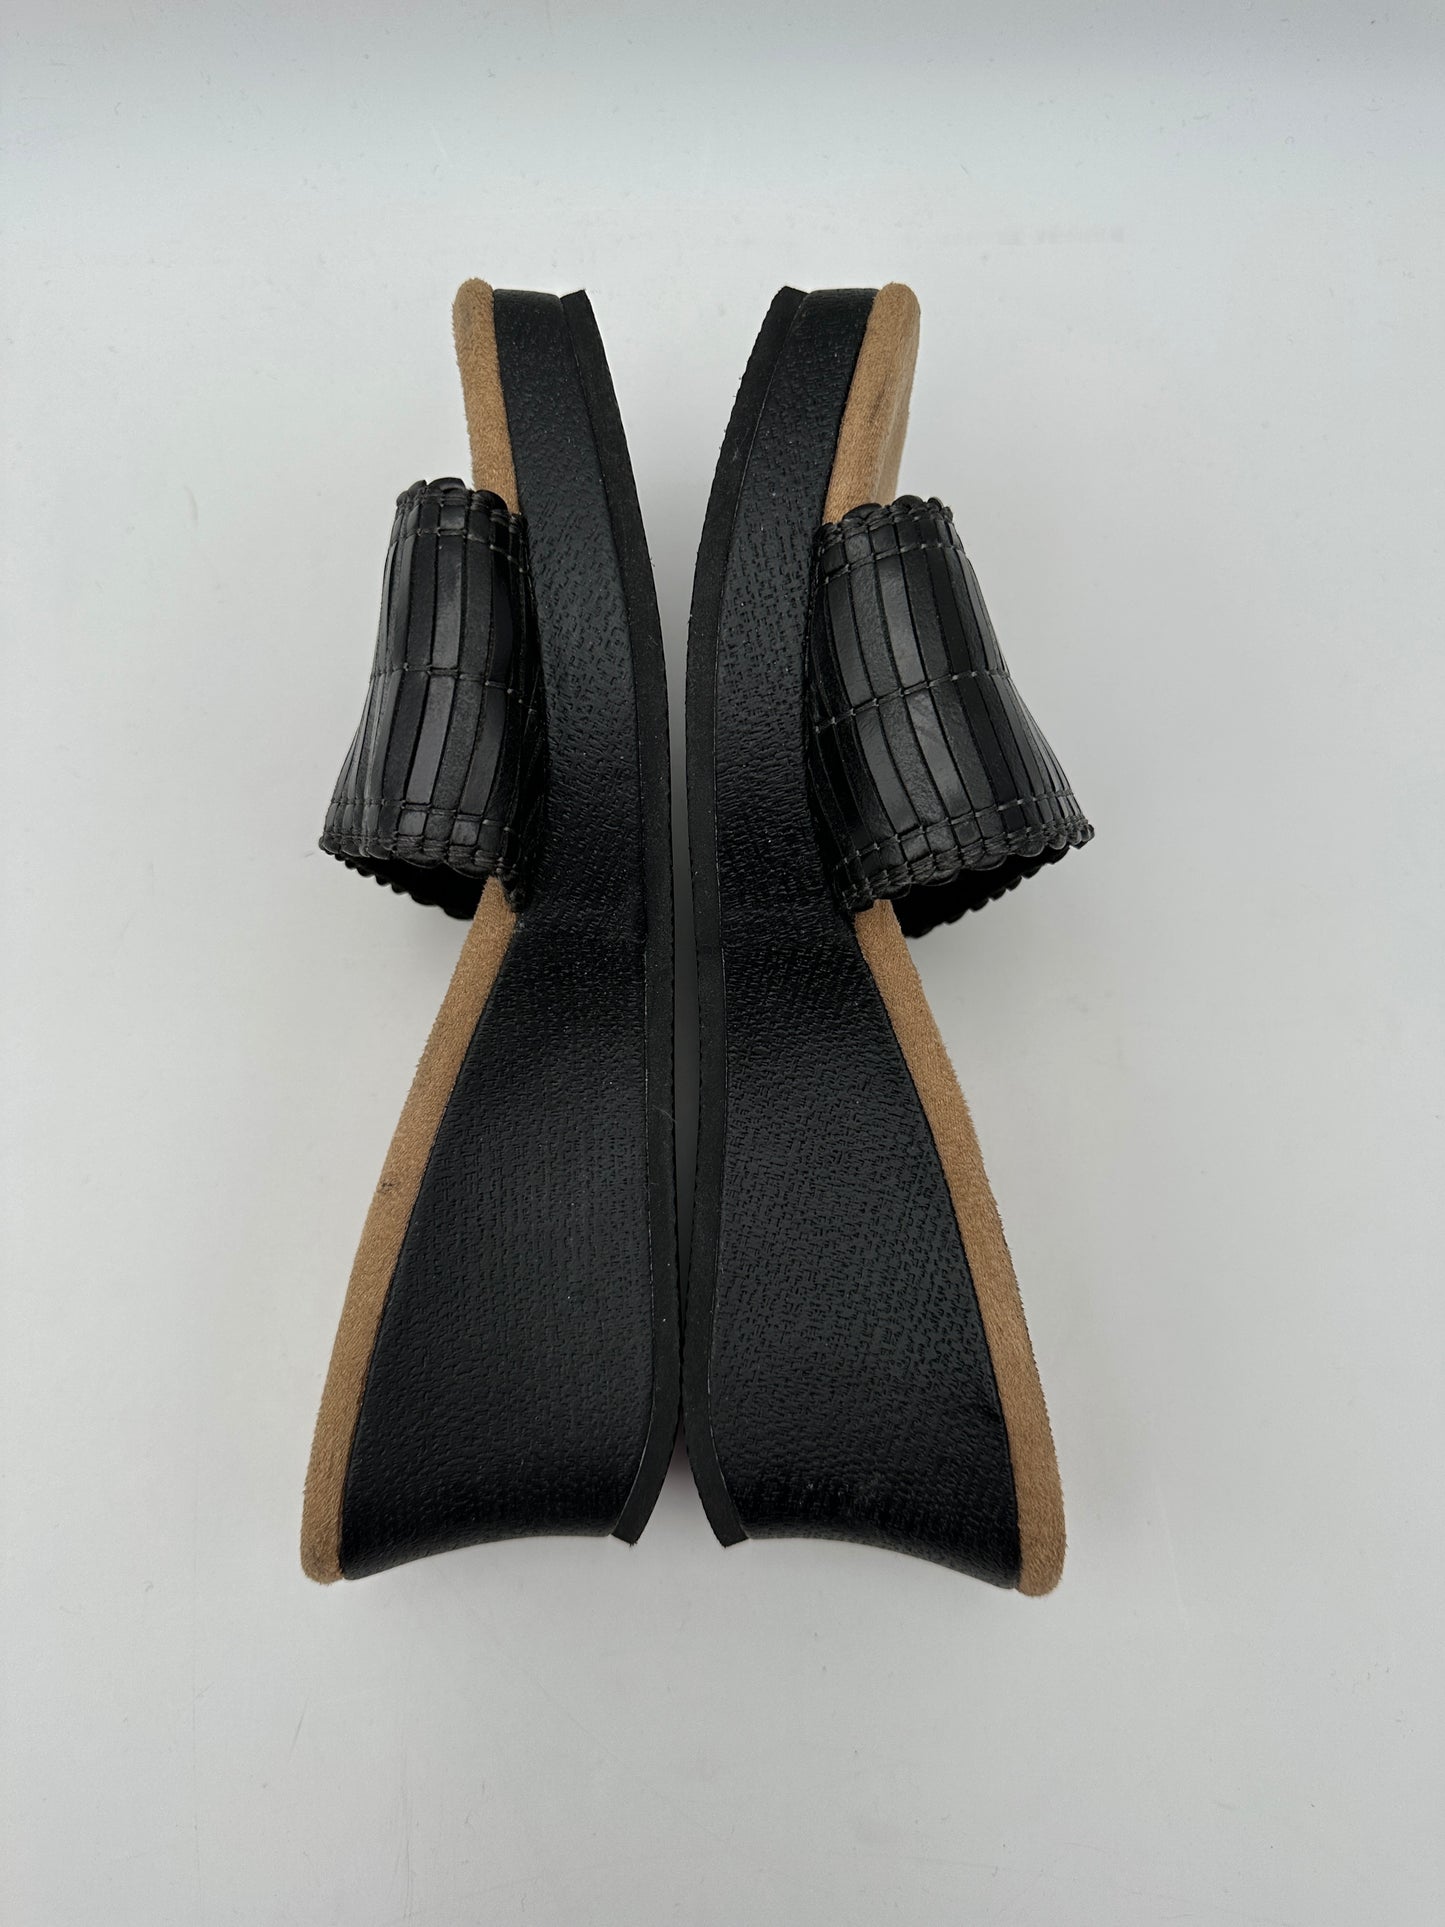 Mudd Size 7.5 M Black "Lenore" Slip-On Platform Wedge Sandals